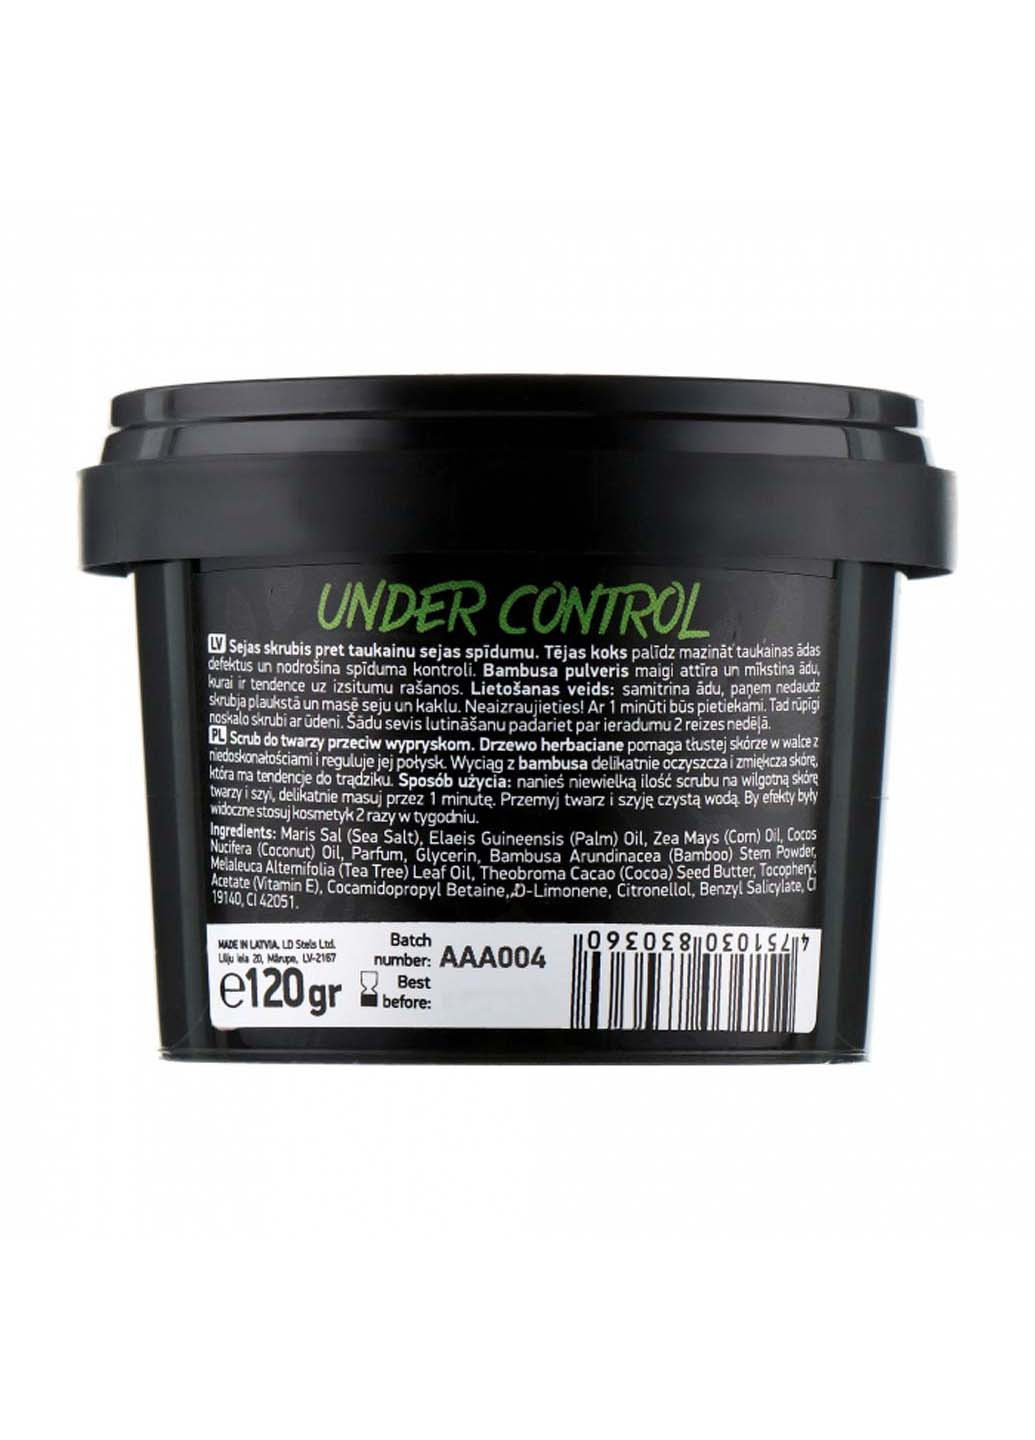 Скраб для обличчя Under Control 120 мл Beauty Jar (265211075)